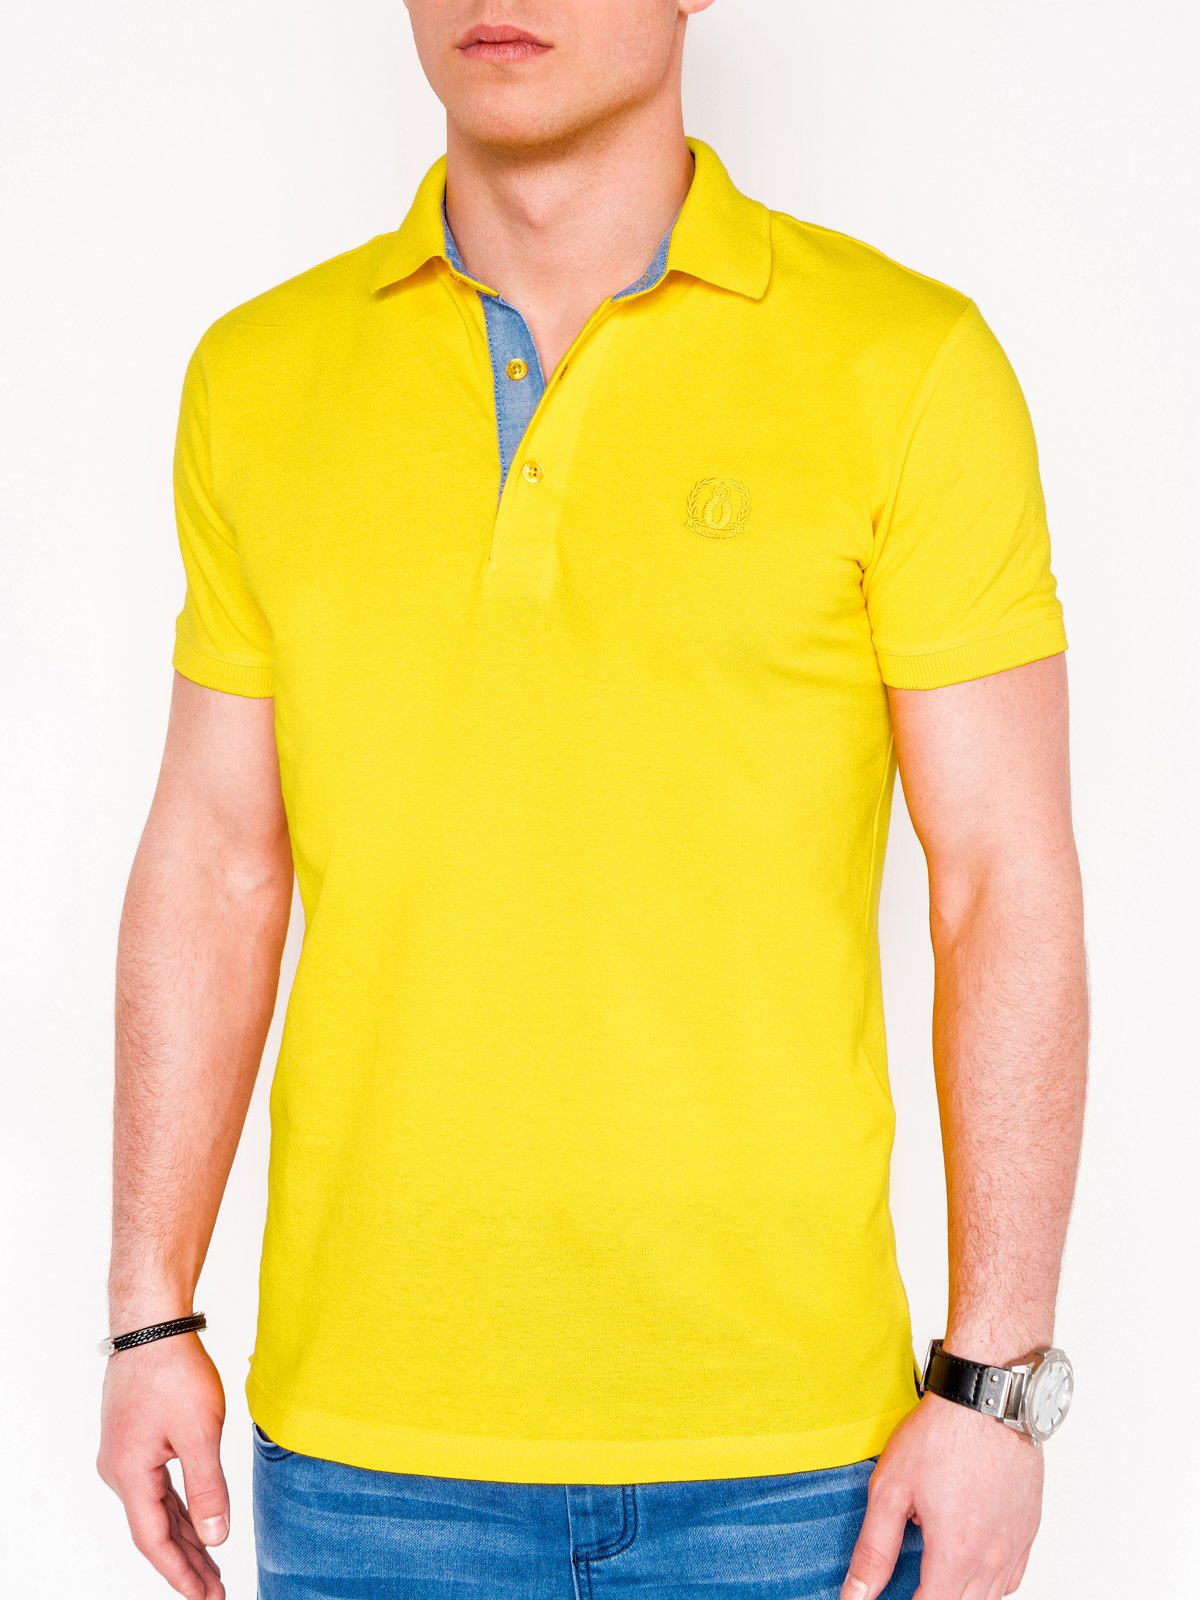 Men's plain polo shirt S837 - light yellow | MODONE wholesale ...